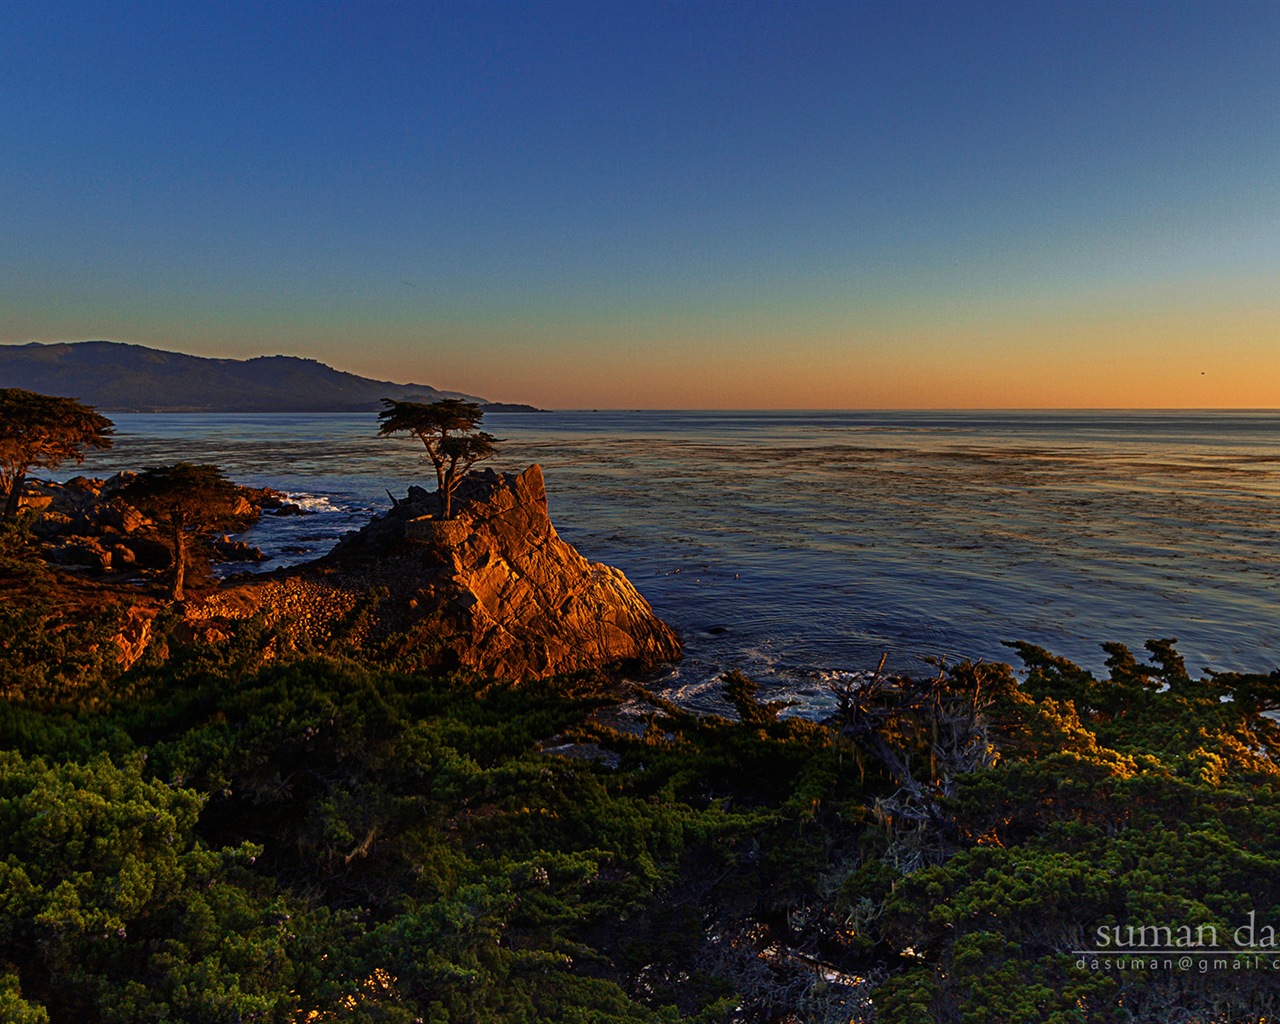 California coastal scenery, Windows 8 theme wallpapers #3 - 1280x1024